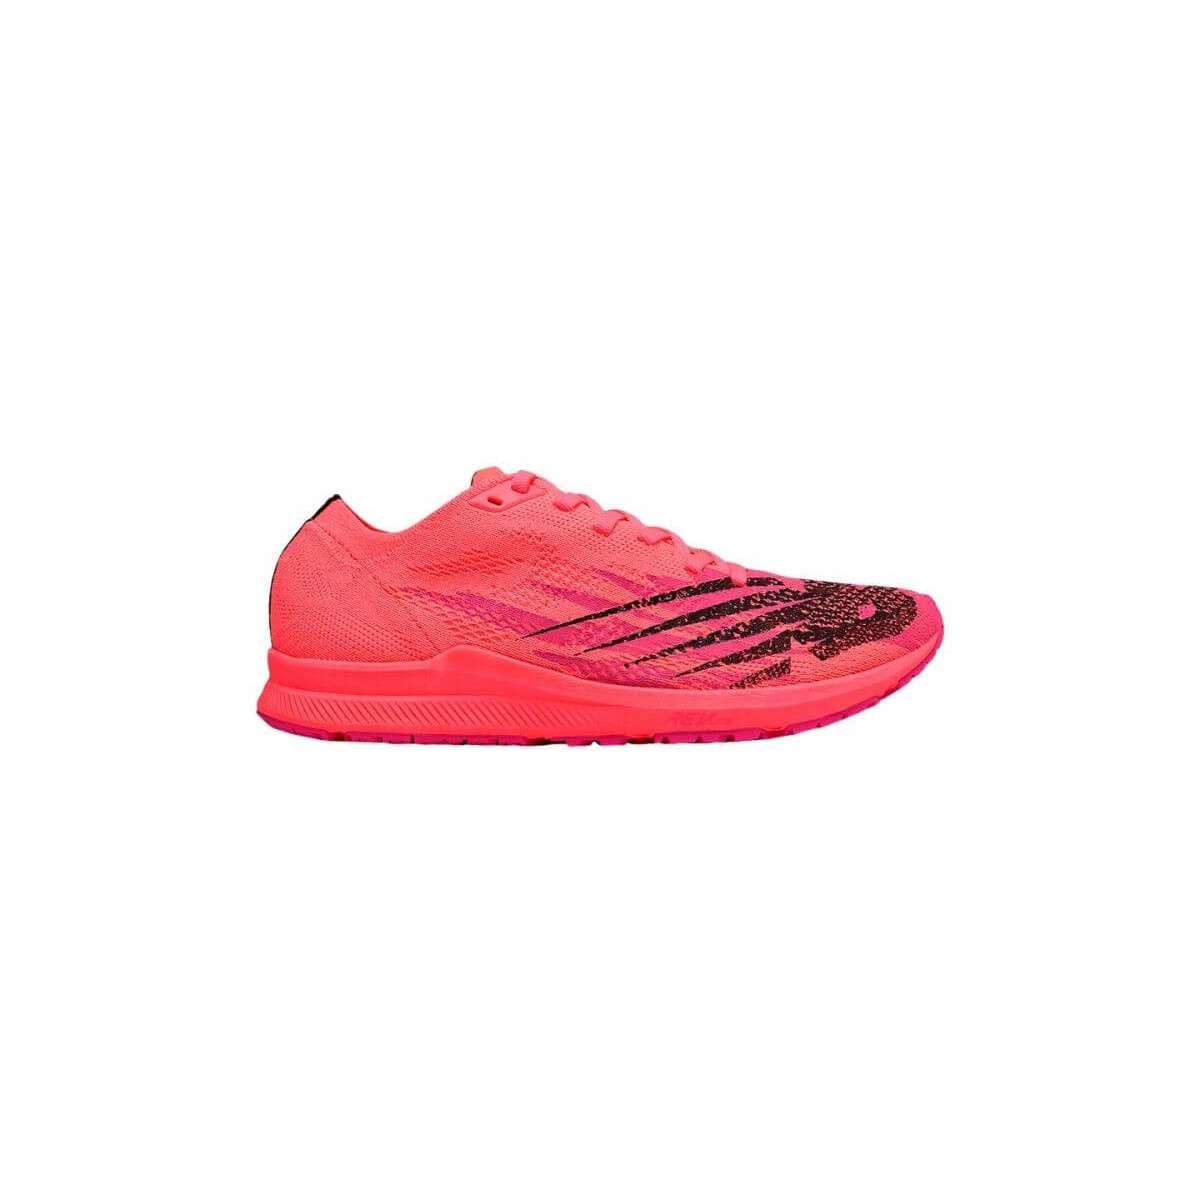 New Balance 1500v6 Women's Running Shoes Pink